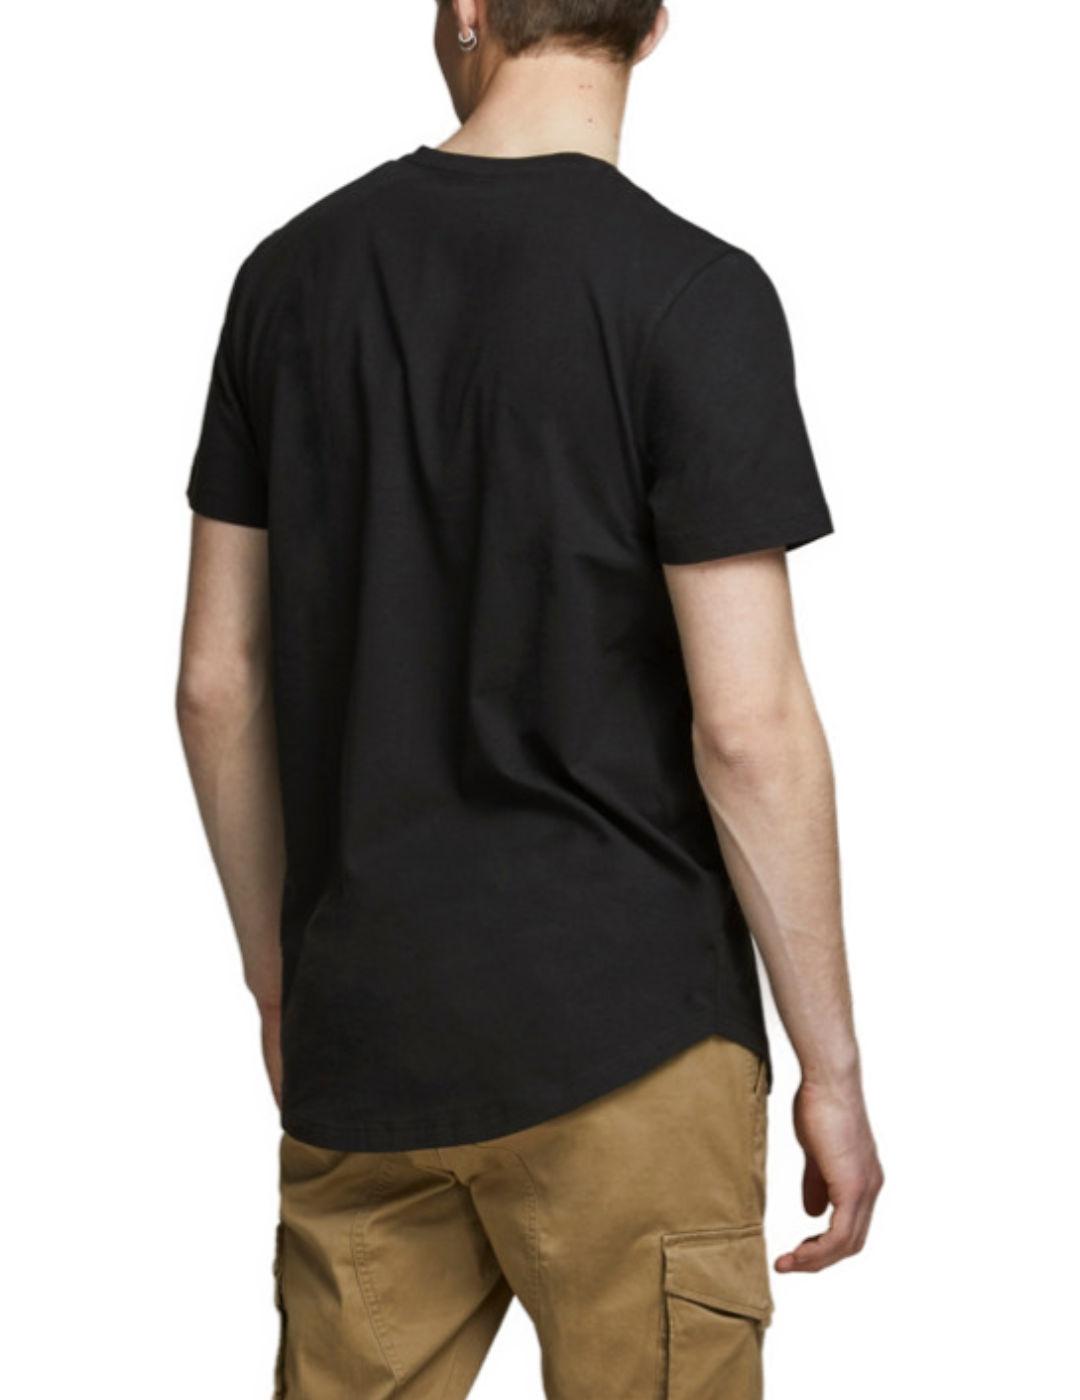 Camiseta Jack/df01Jones Enoa negra manga corta para hombre